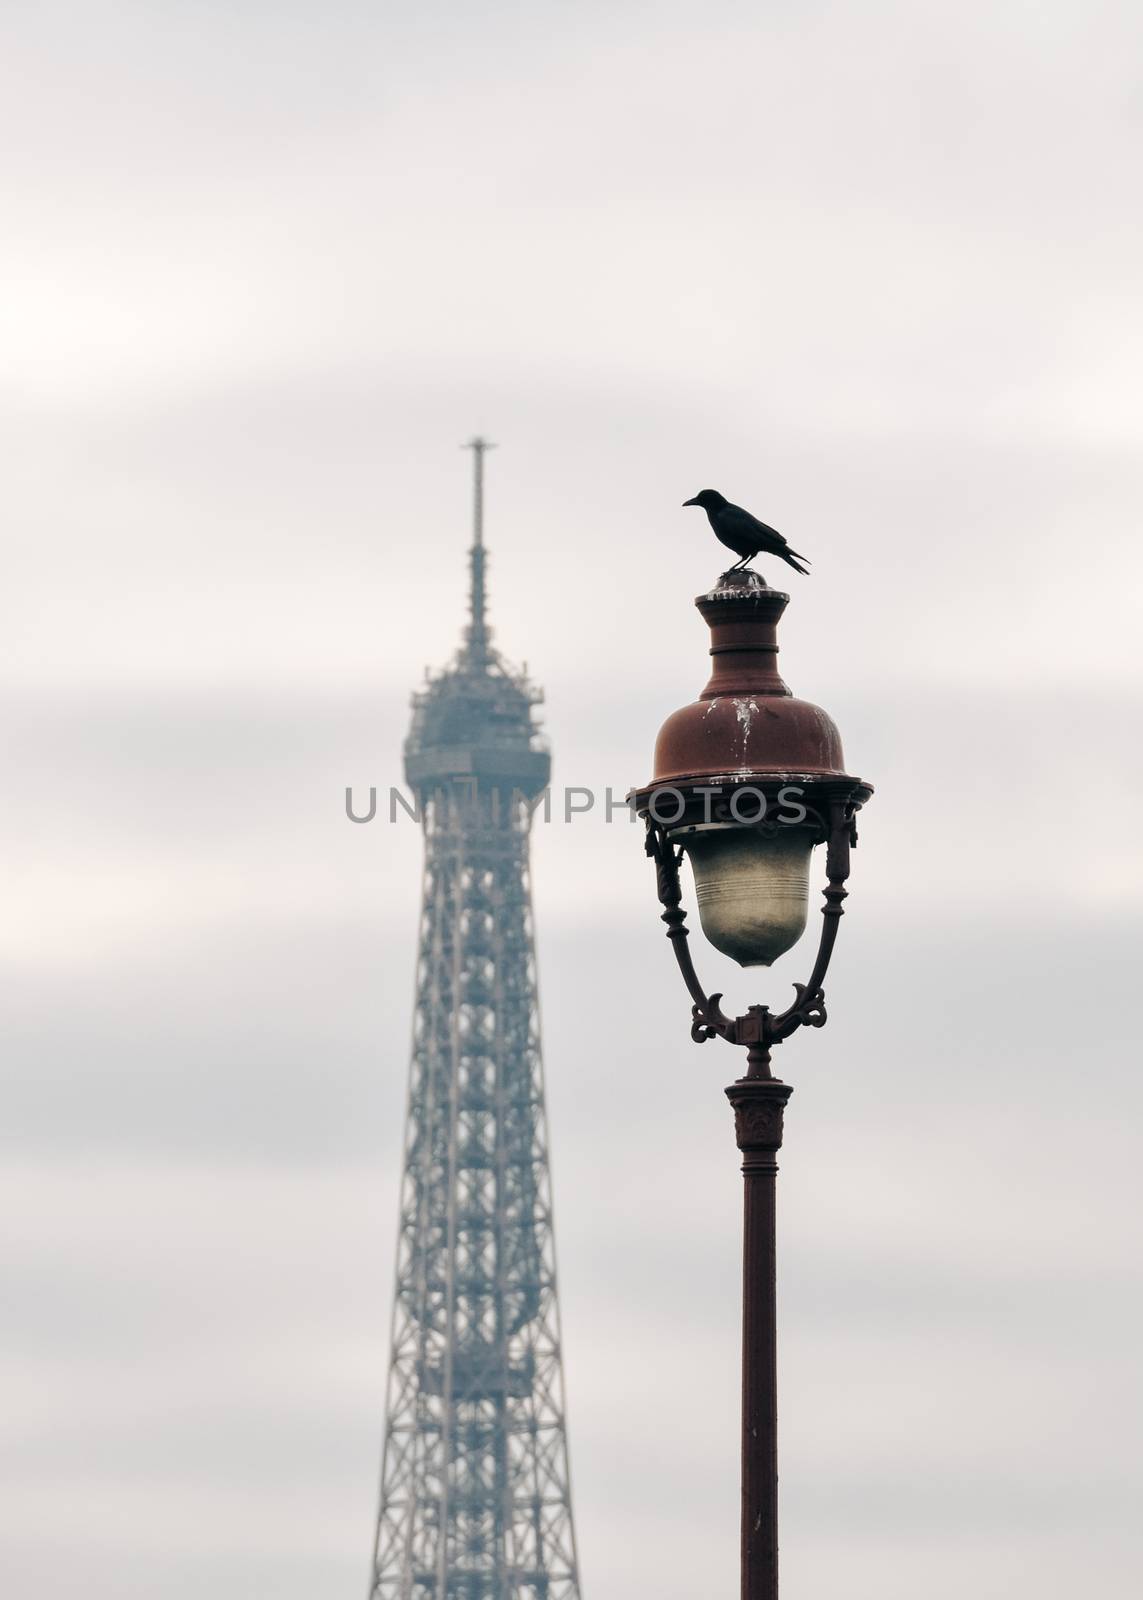 A raven on top of street light in Paris by dutourdumonde